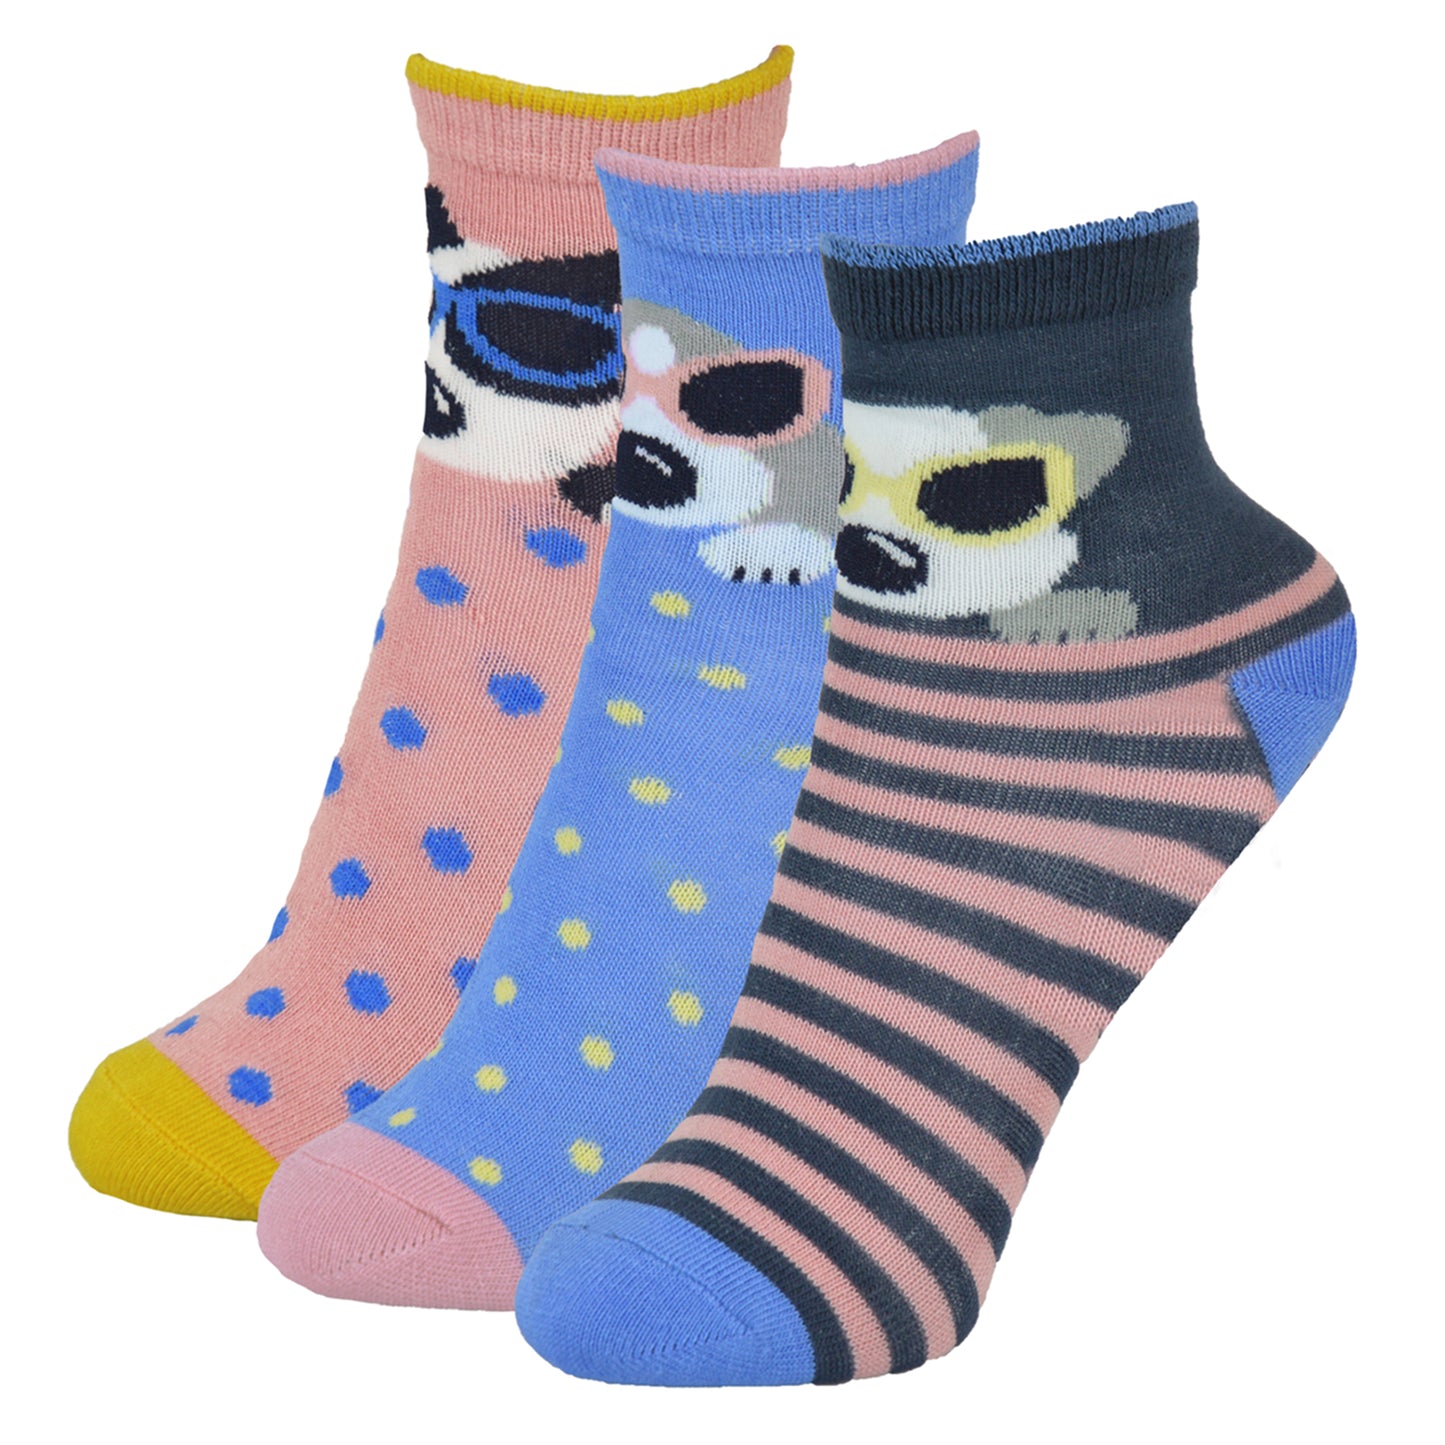 6 Pairs Girls' Unicorn and Dog Patterned Bamboo Socks